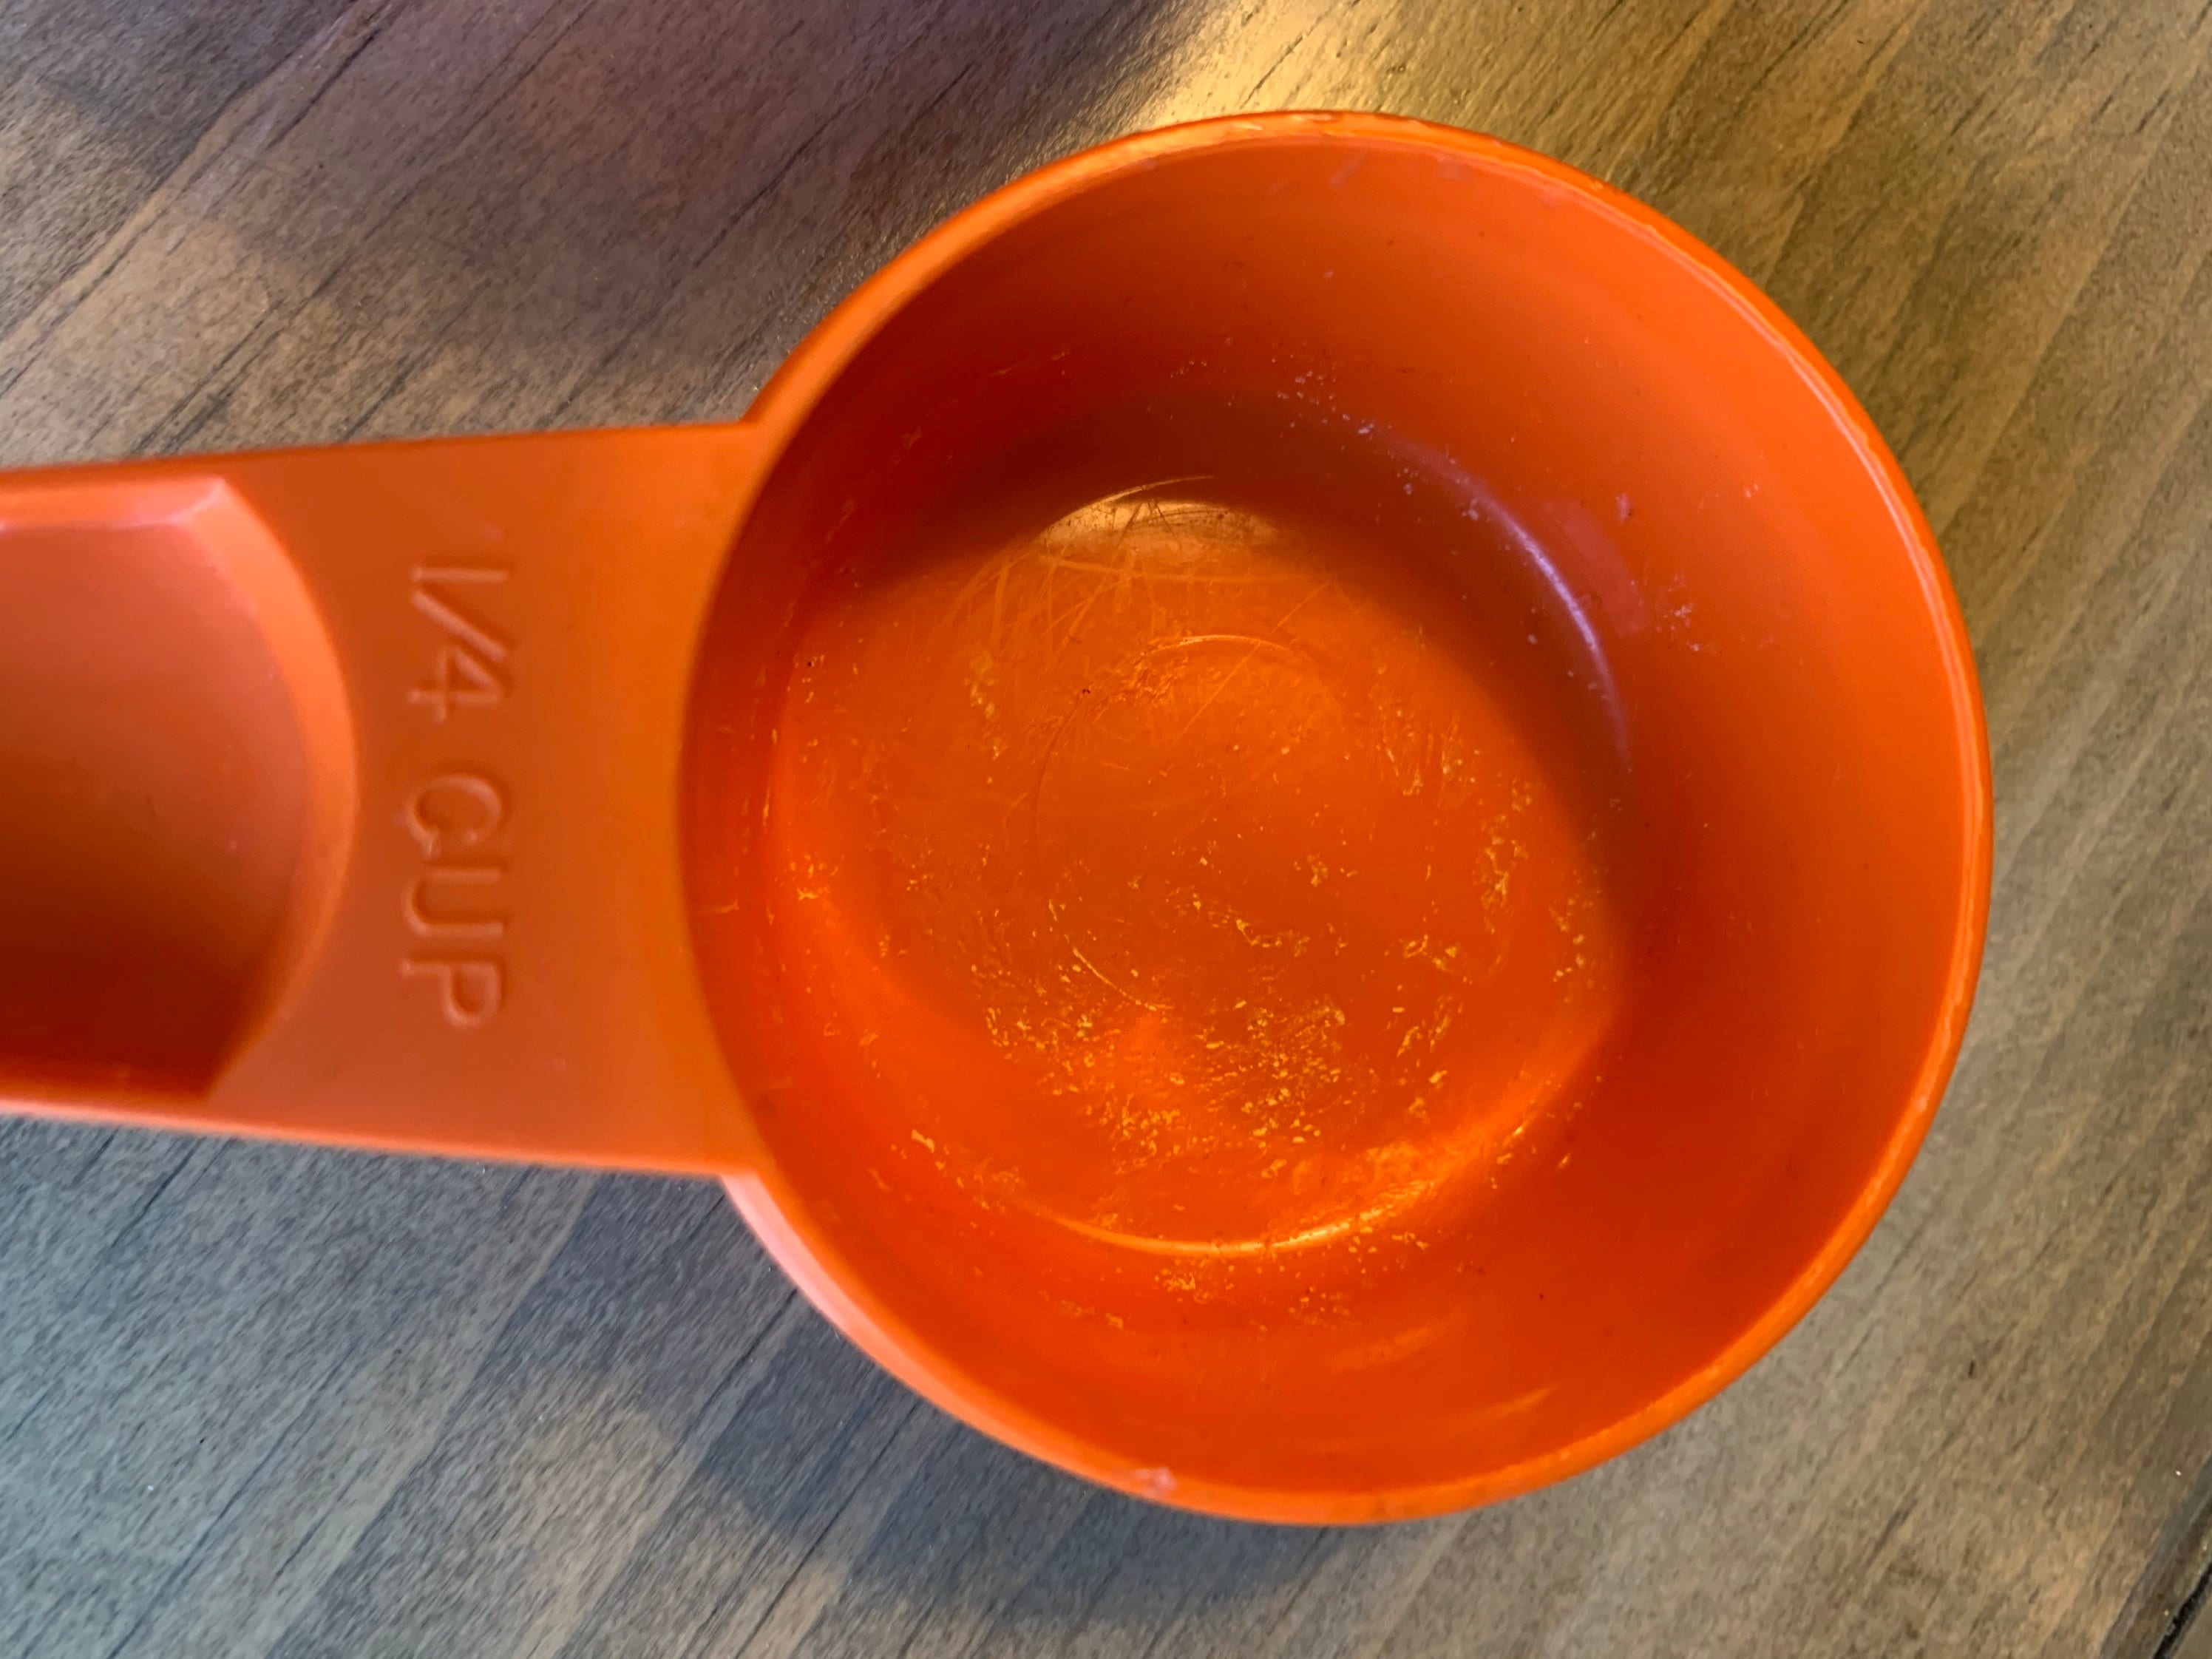 TUPPERWARE MEASURING CUP Burnt Orange 3/4 Cup Size Replacement Vintage  $3.50 - PicClick